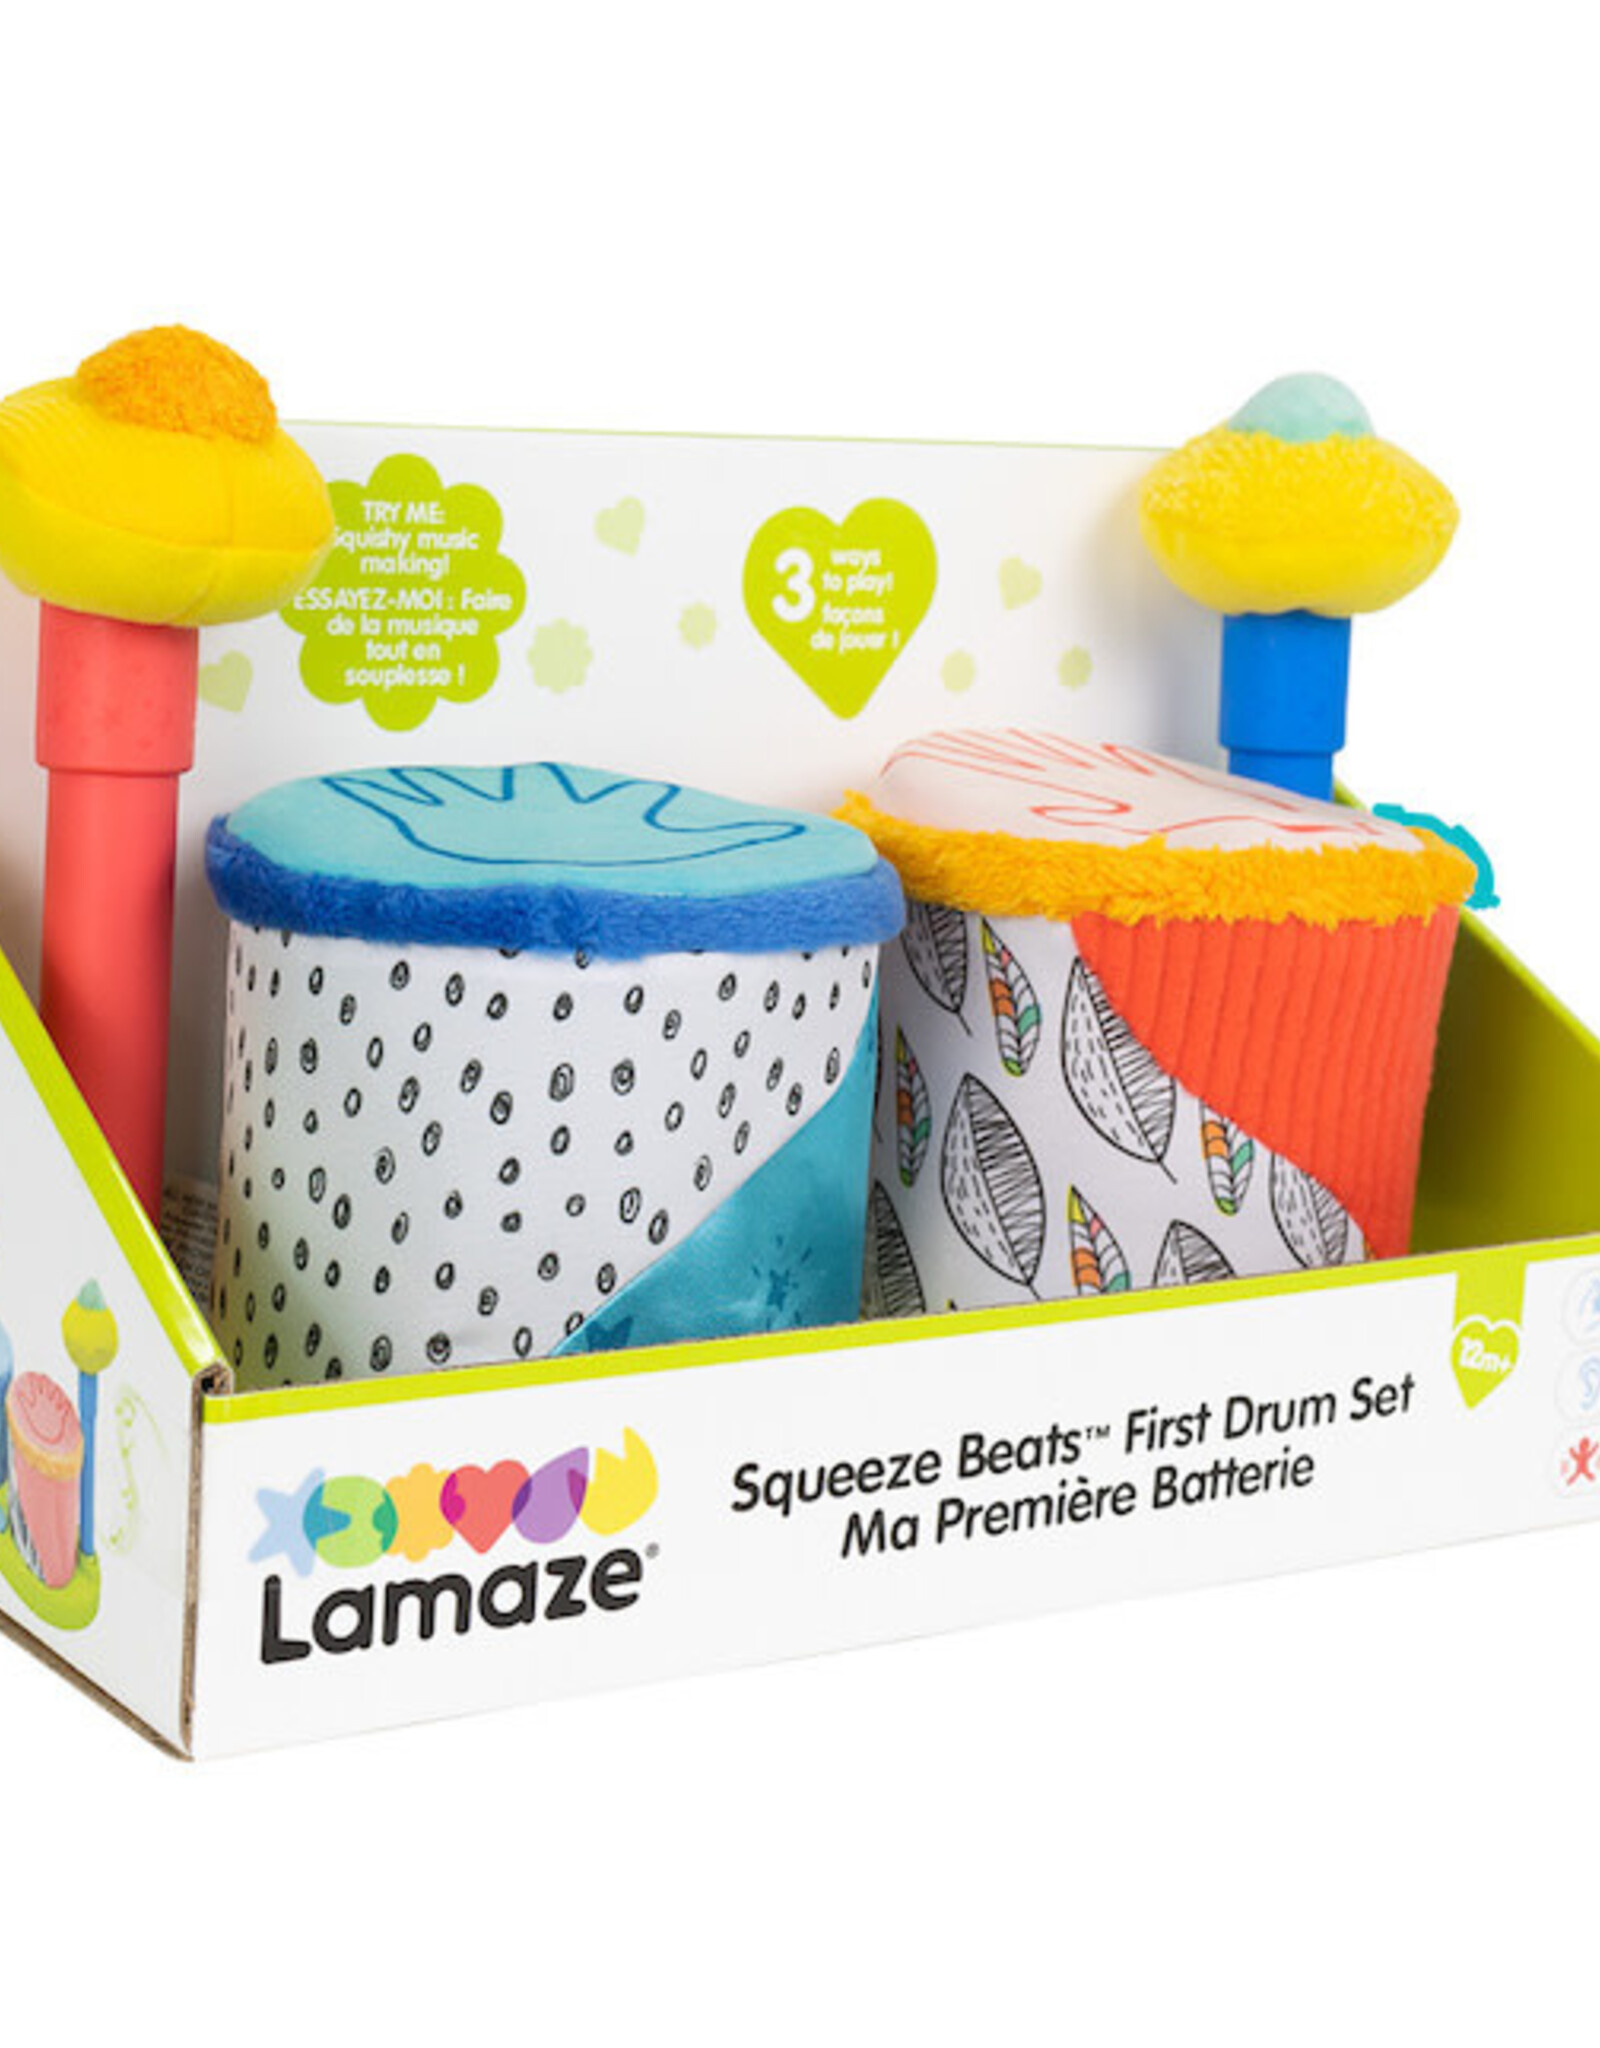 Fat Brain Toy Co. Lamaze Squeeze Beats First Drum Set